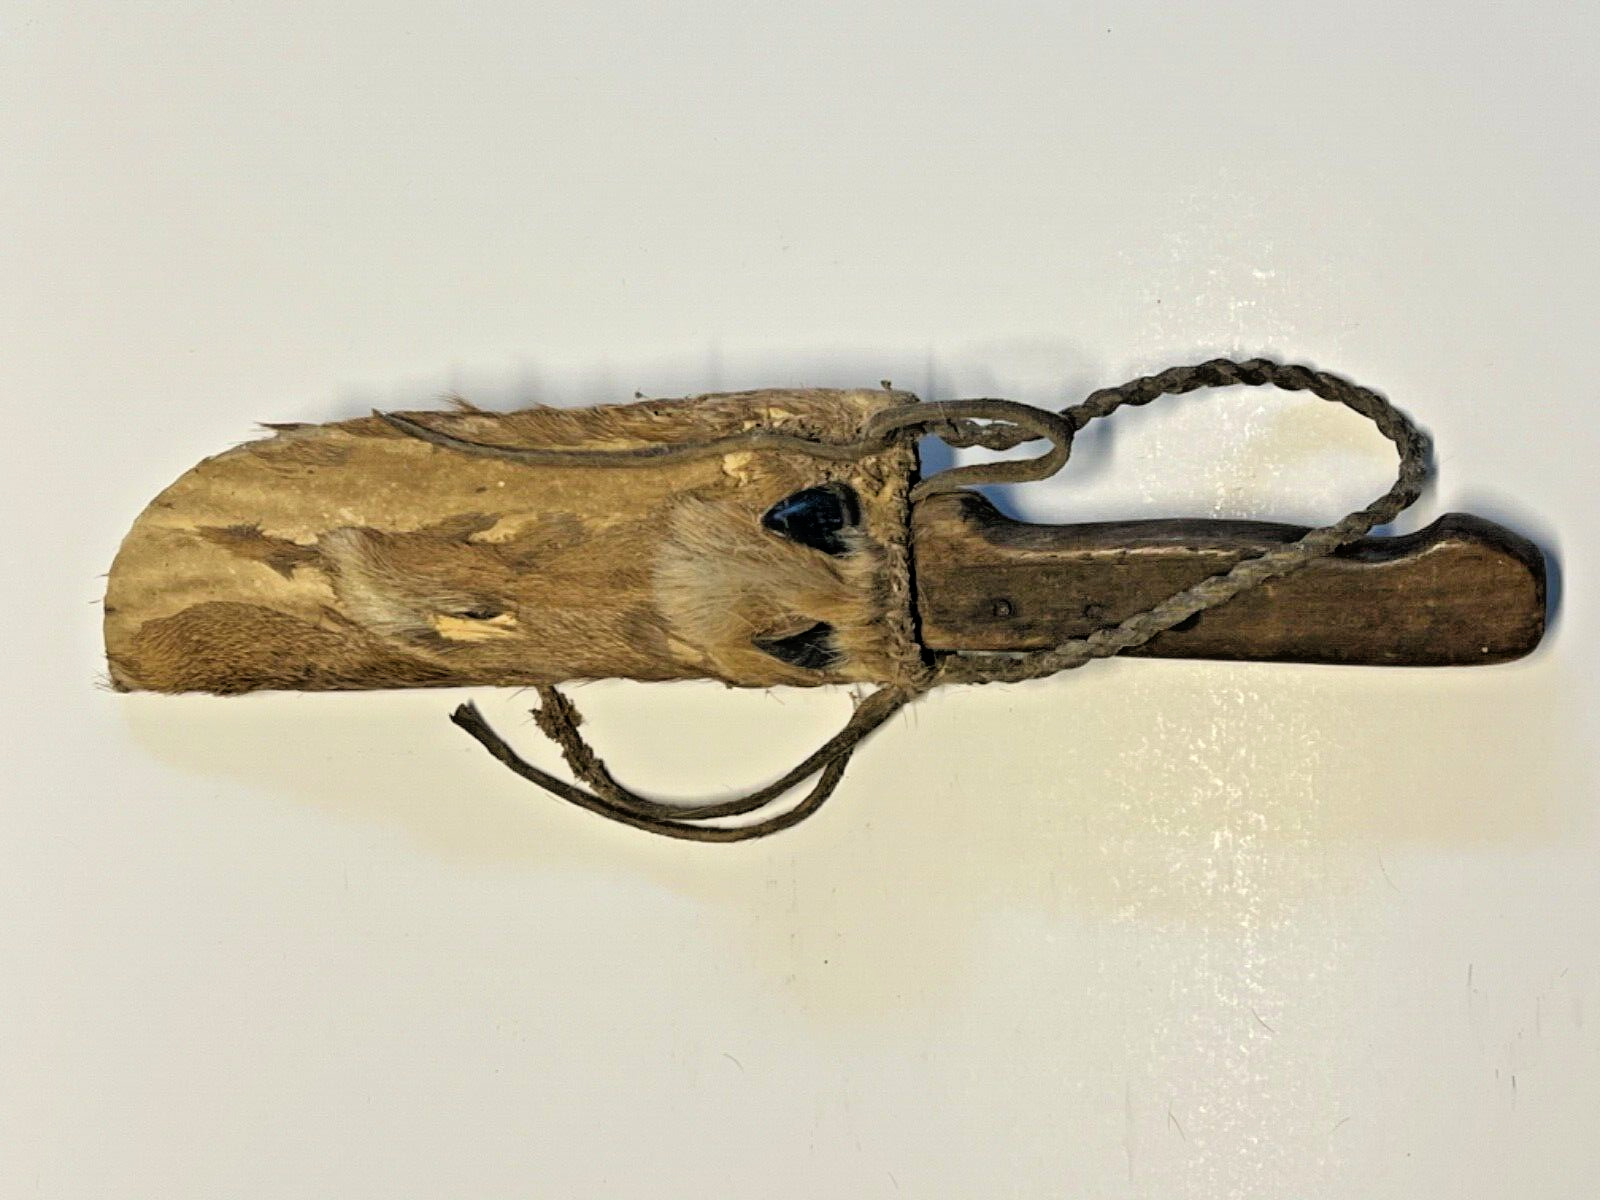 Antique Native American Indian Deer Skin Sheath Plus Knife-Late 1800s-1910-Lot 4